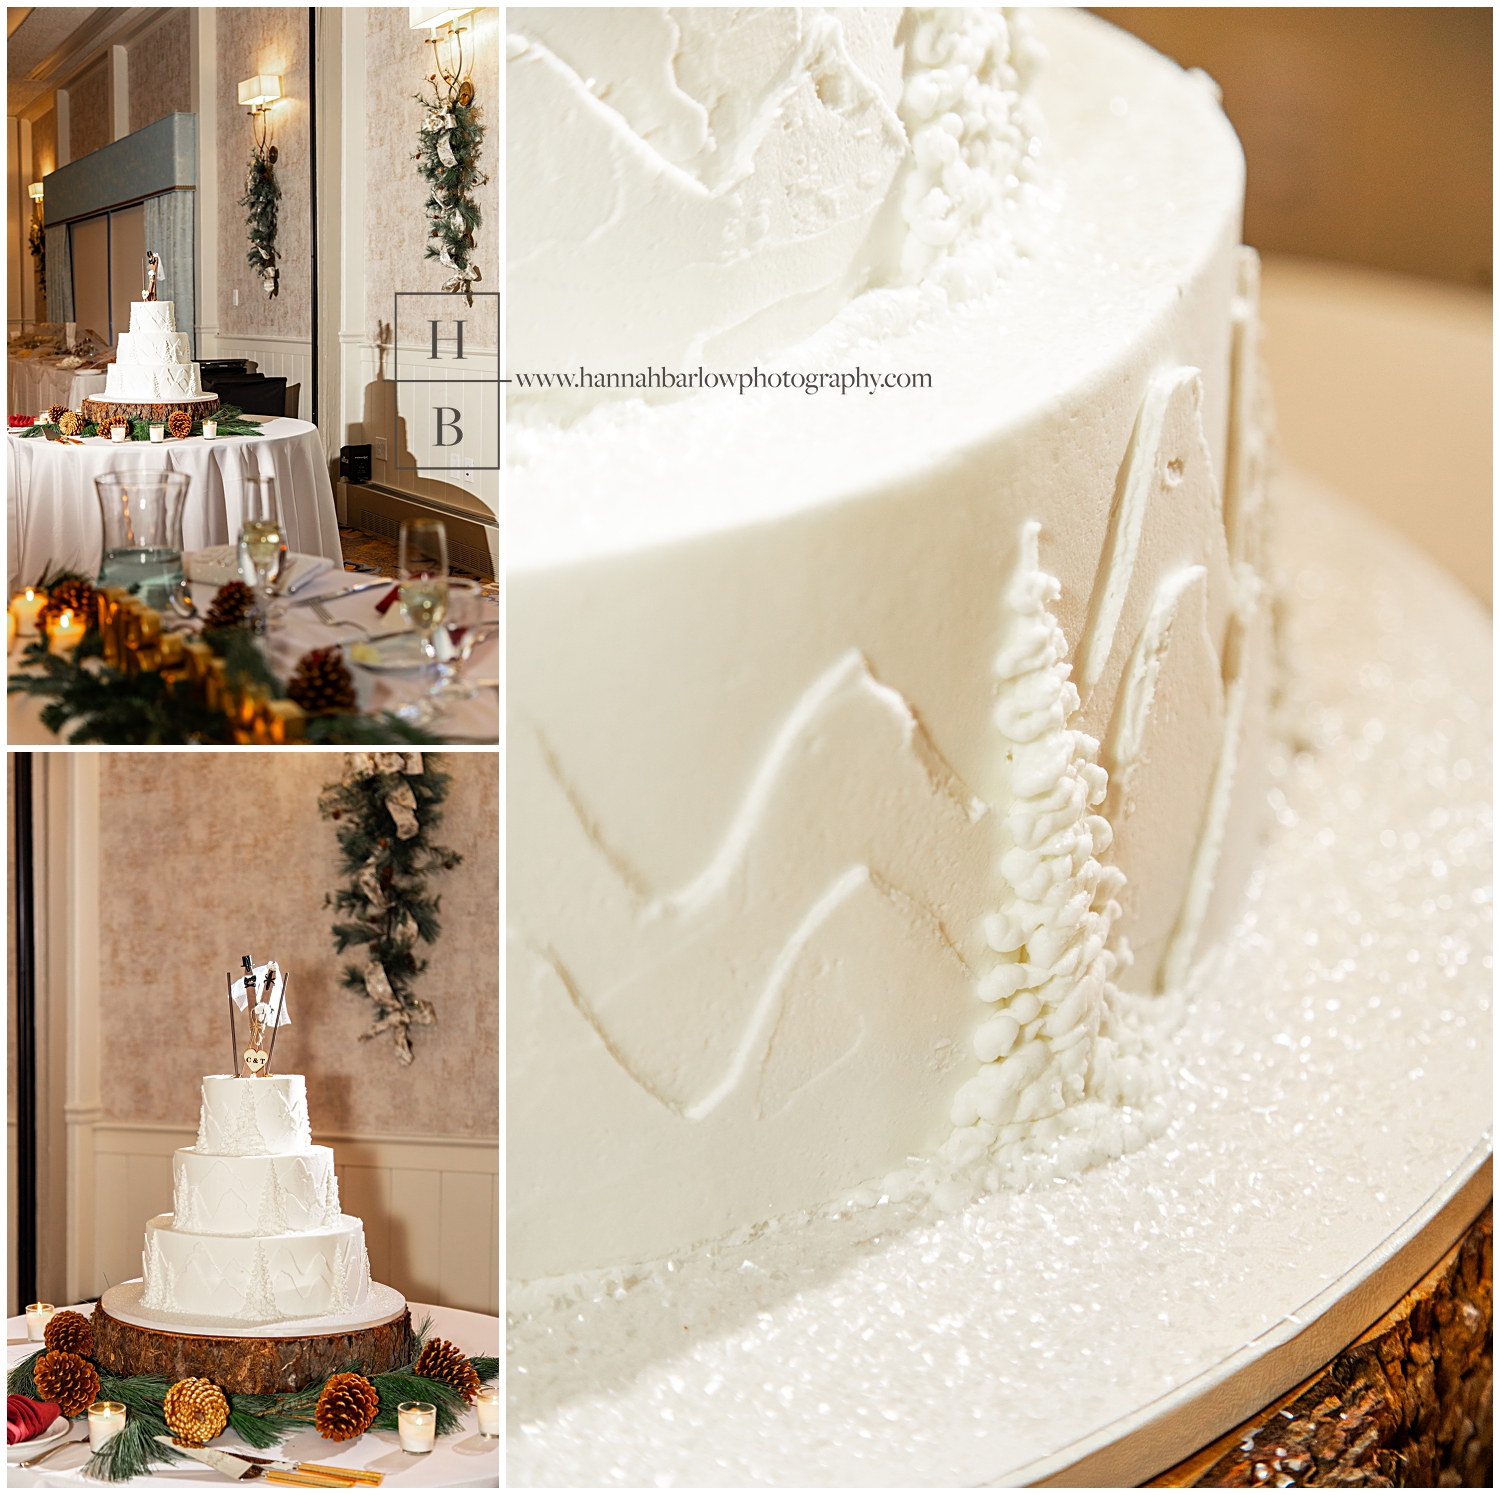 Winter wedding cake with white trees as decor